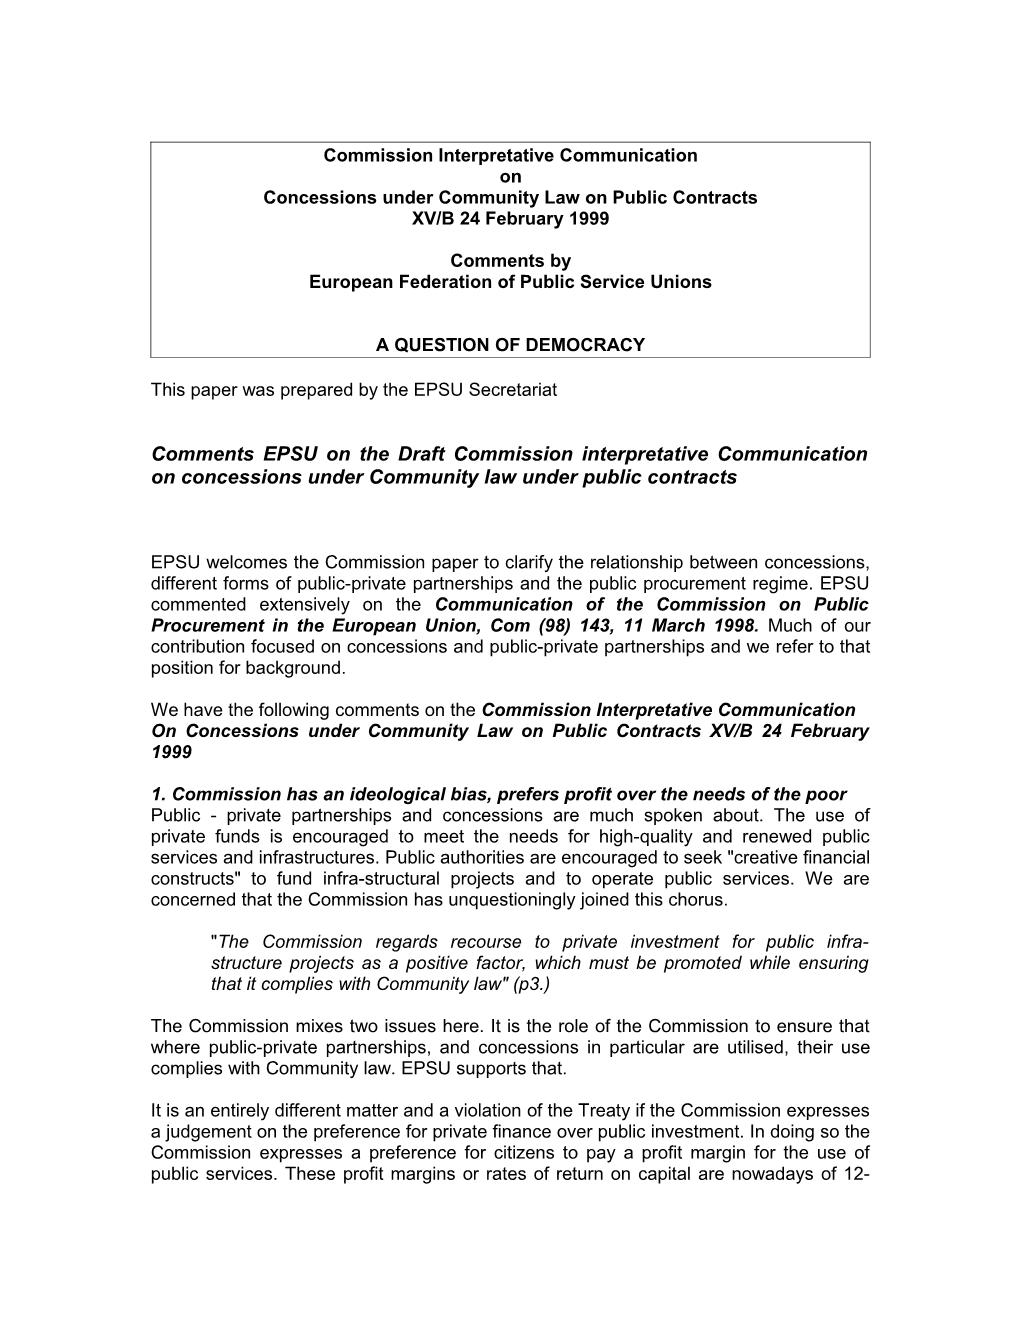 Commission Interpretative Communication on Concessions Under Community Law on Public Contracts